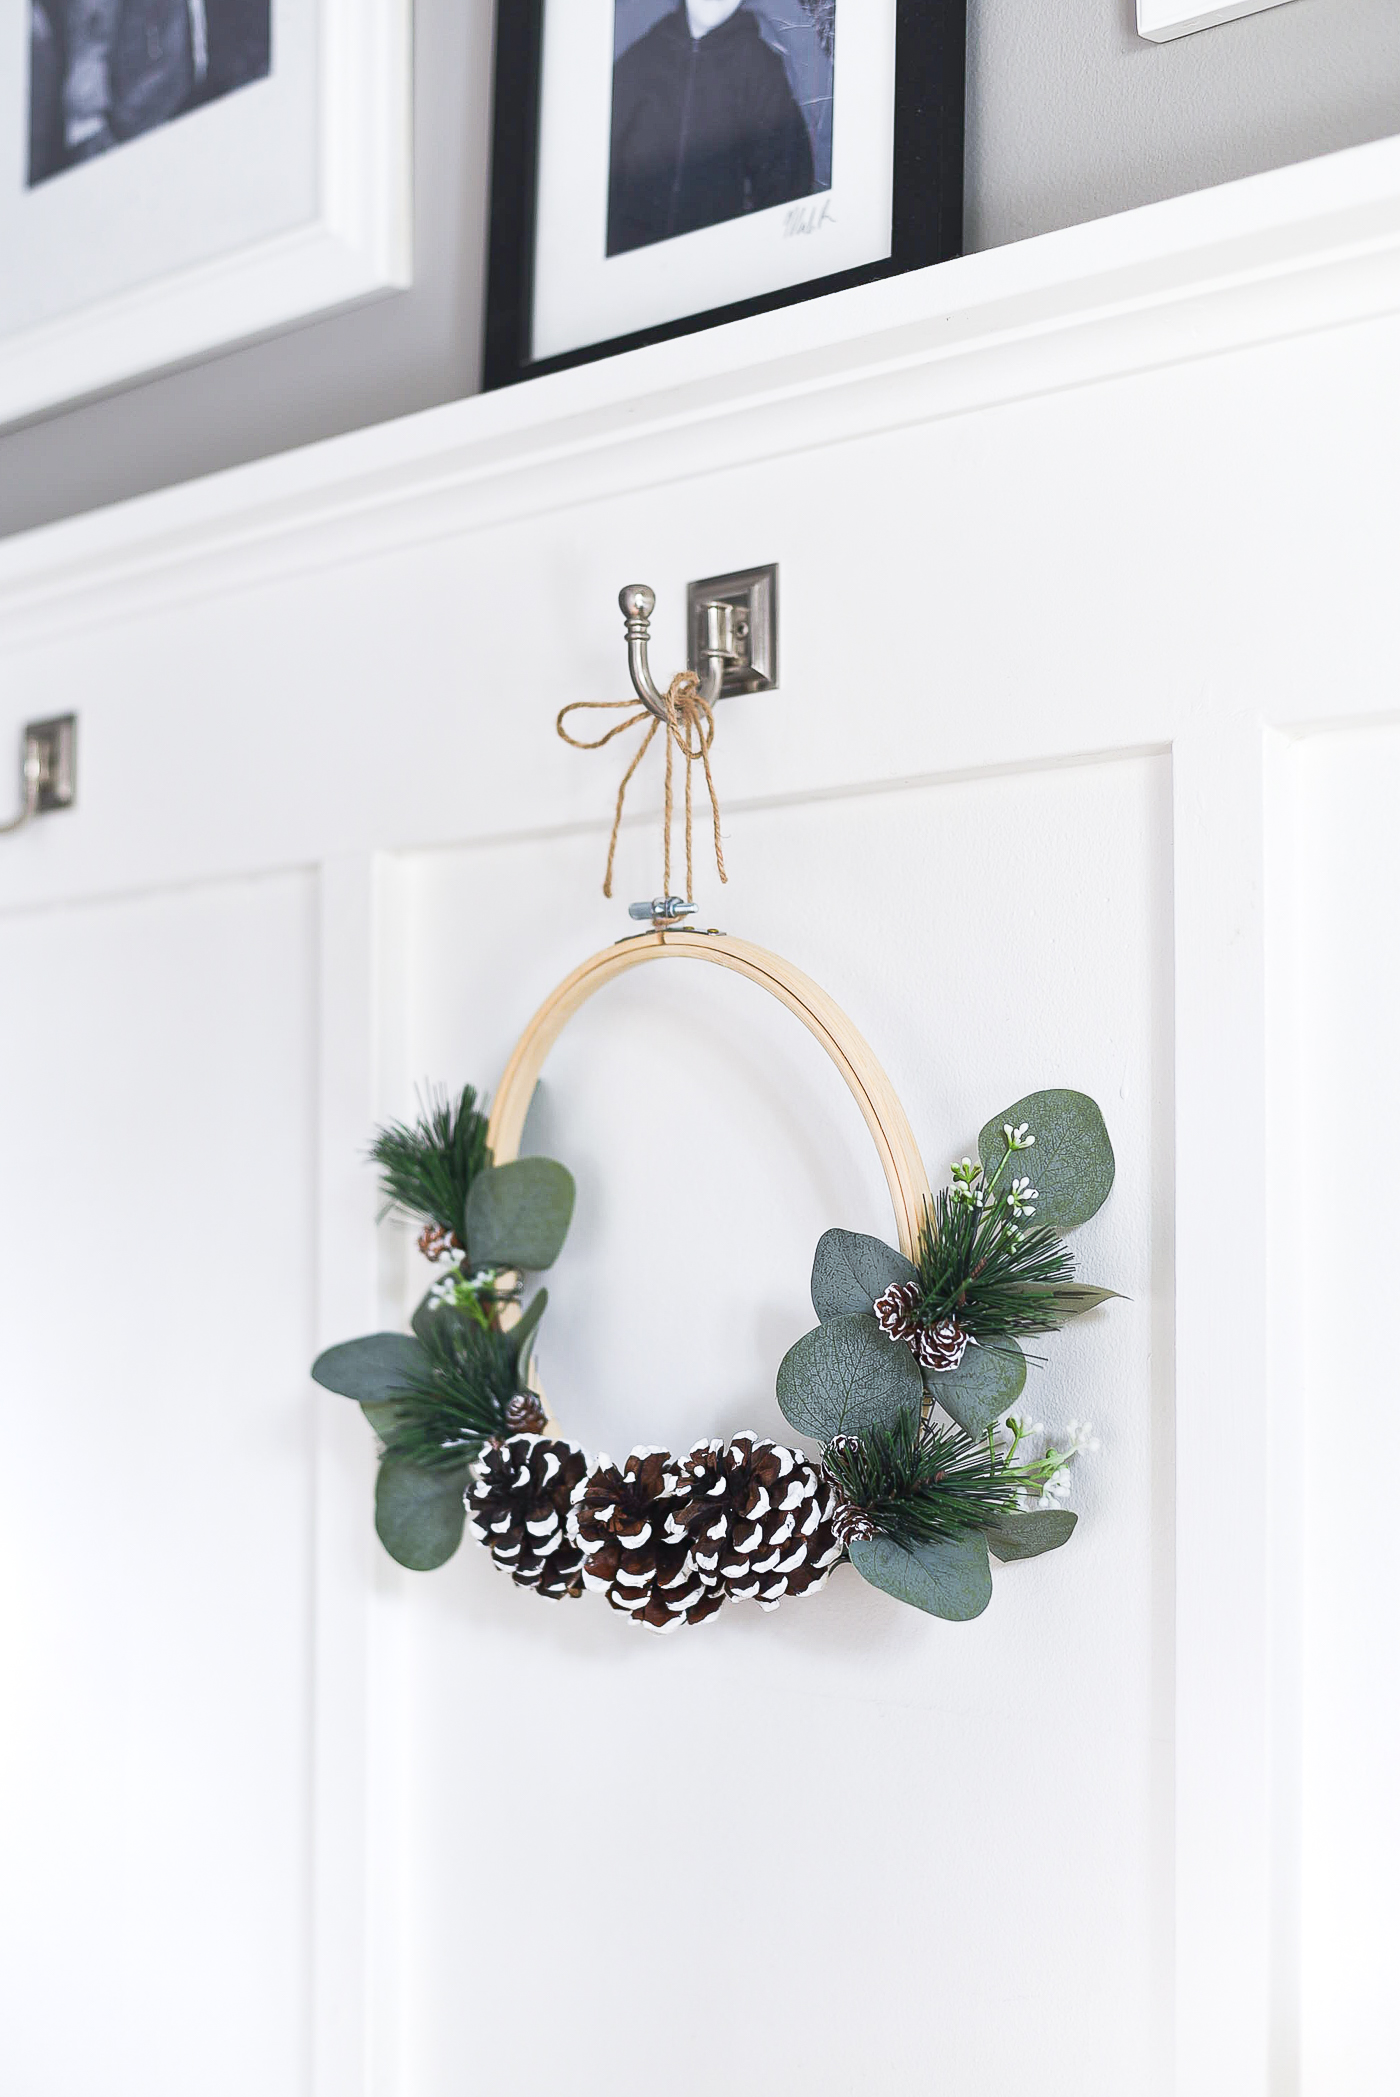 Embroidery Hoop Winter Wreath - Wreath Ideas with Embroidery Hoops - Winter Wreath Crafts - DIY - How To Make Embroidery Hoop Wreath